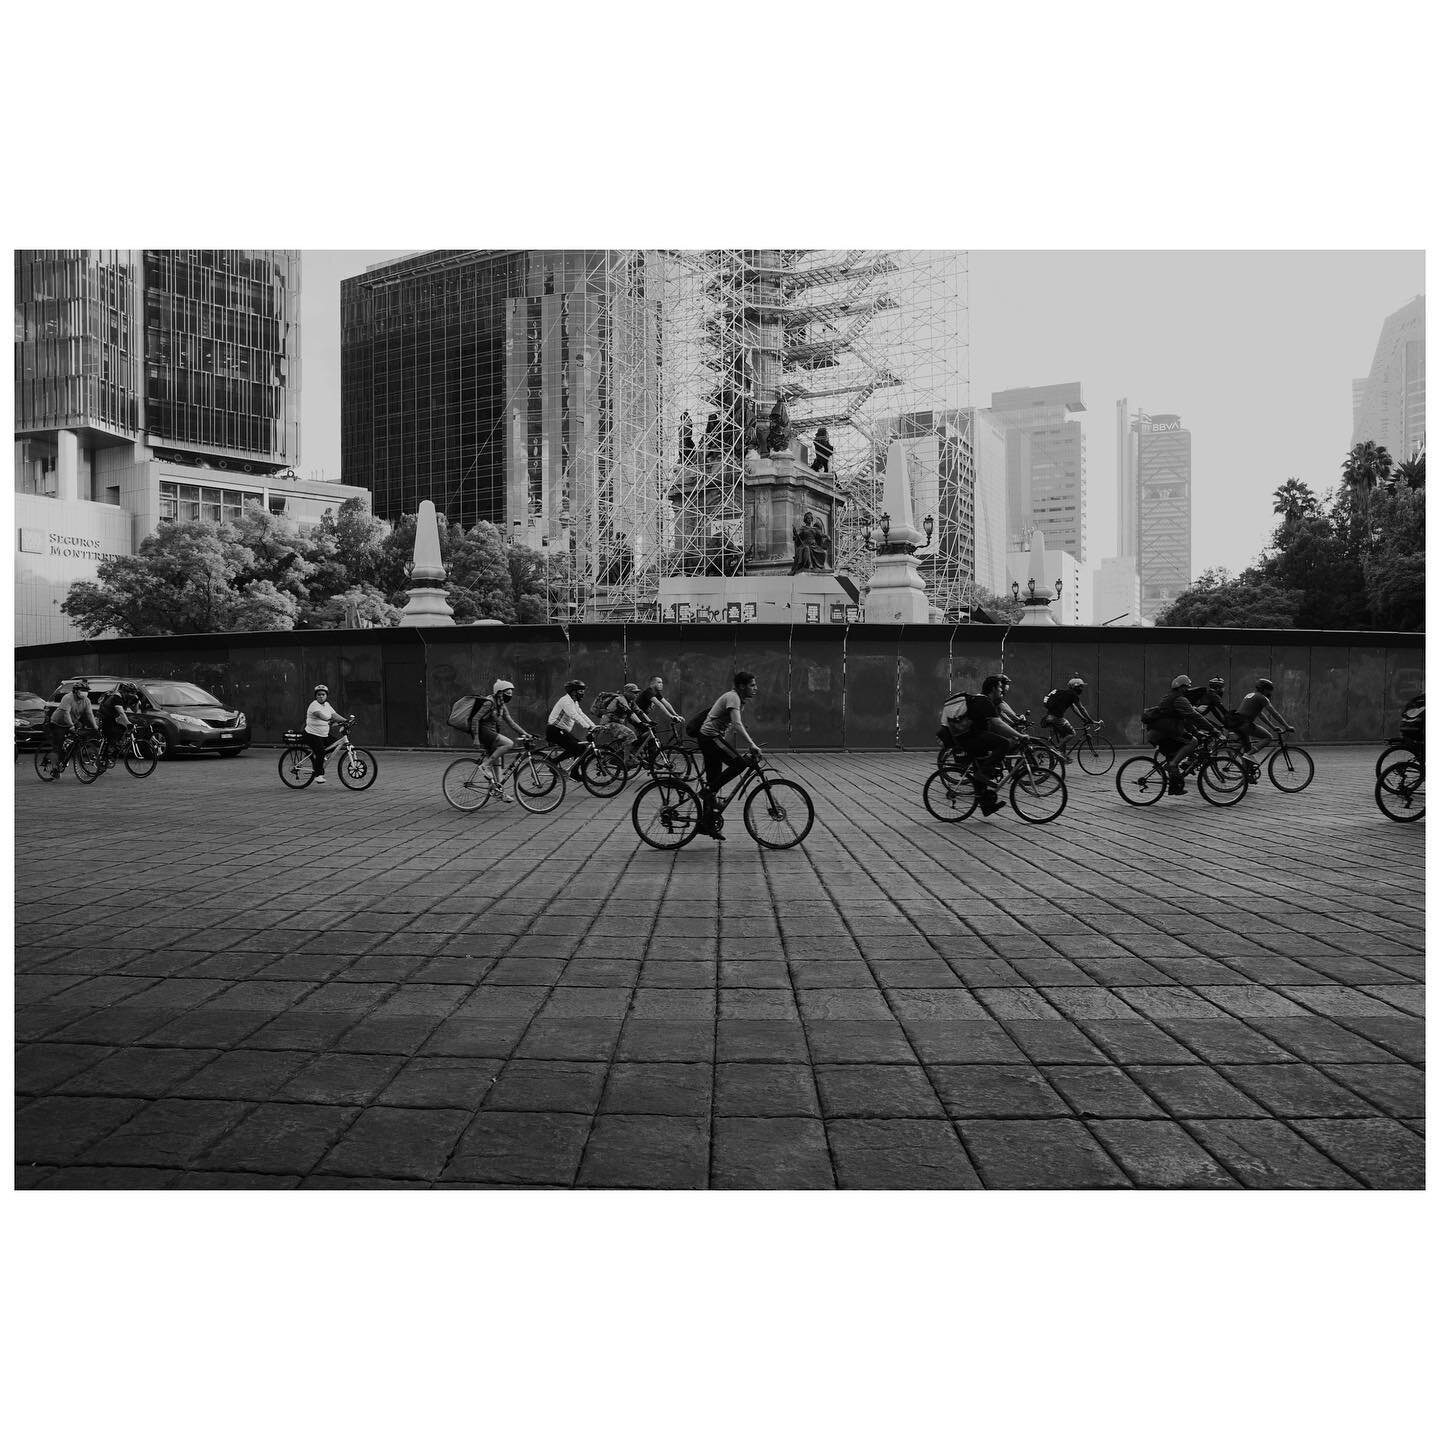 bike ride
.
.
.
.
#city #cityscape #street #streetphotography #bike #bicycles #shadow #statue #blackandwhite #blackandwhitephotography #Fuji #FujiXT4 #XT4 #photography #dailychallenge #digitalphotography #affinityphoto